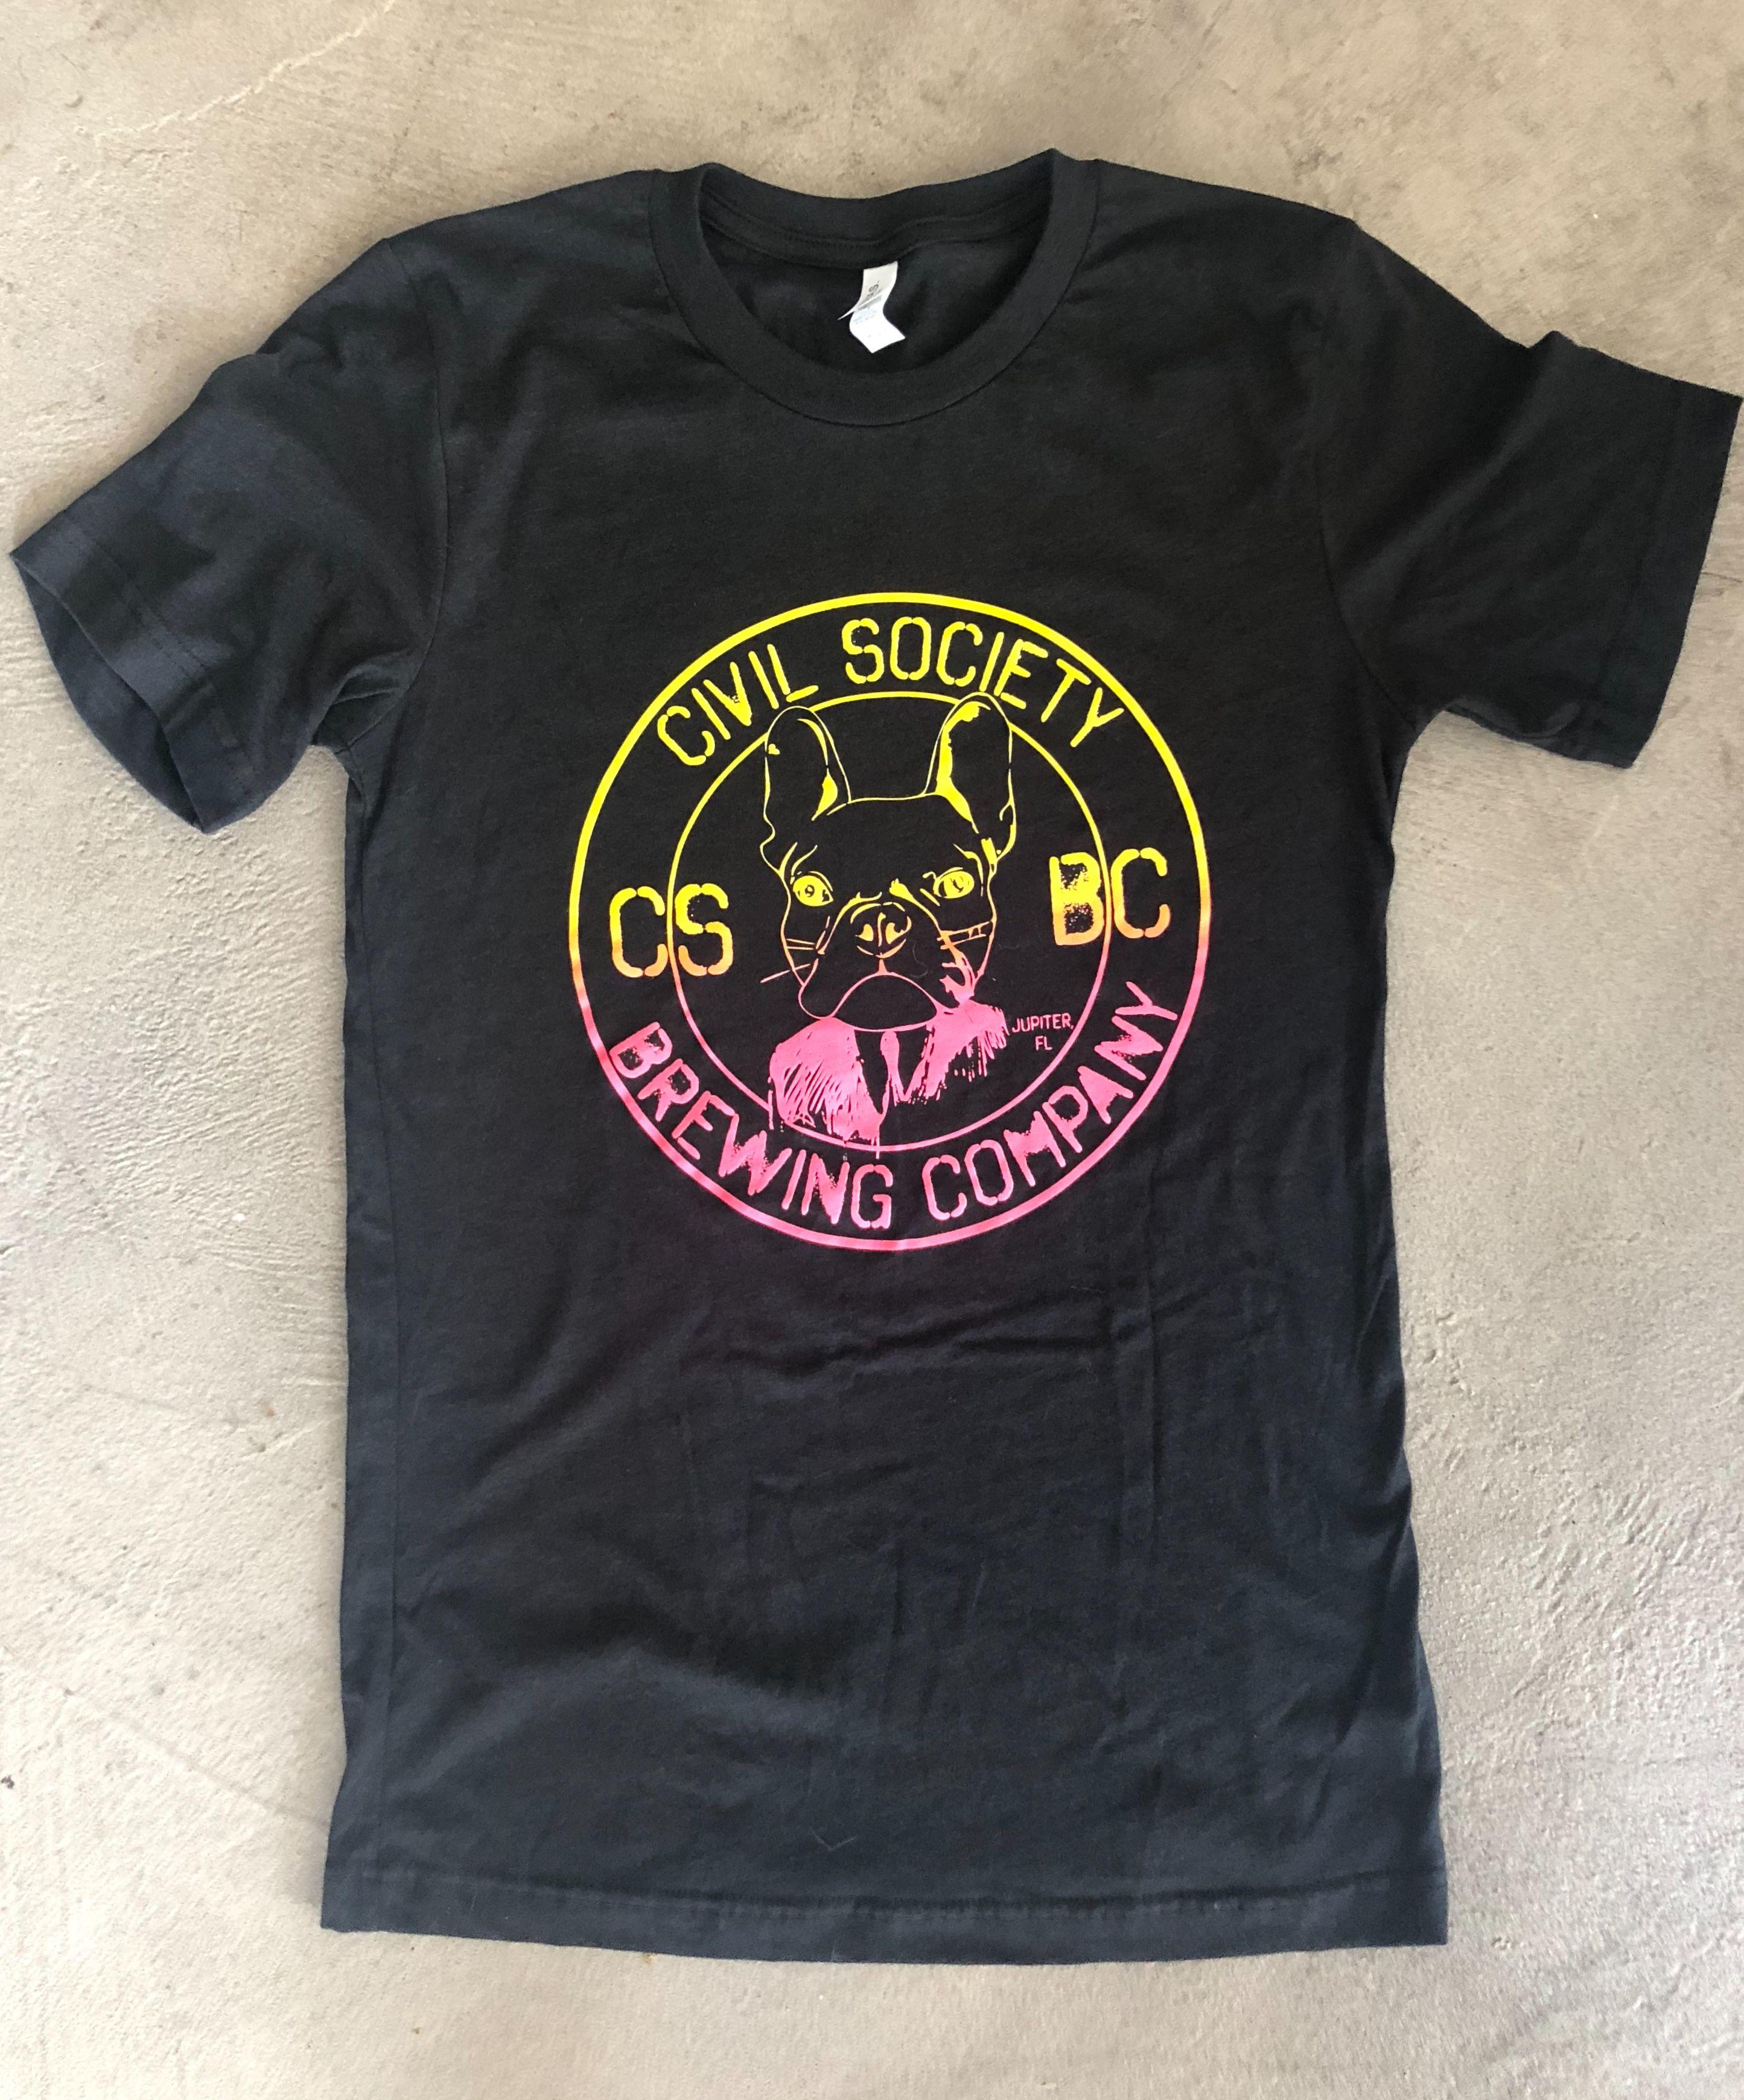 Black and Yellow Company Logo - Logo Shirt-Black/Pink/Yellow - Hop Shop - Civil Society Brewing Co.